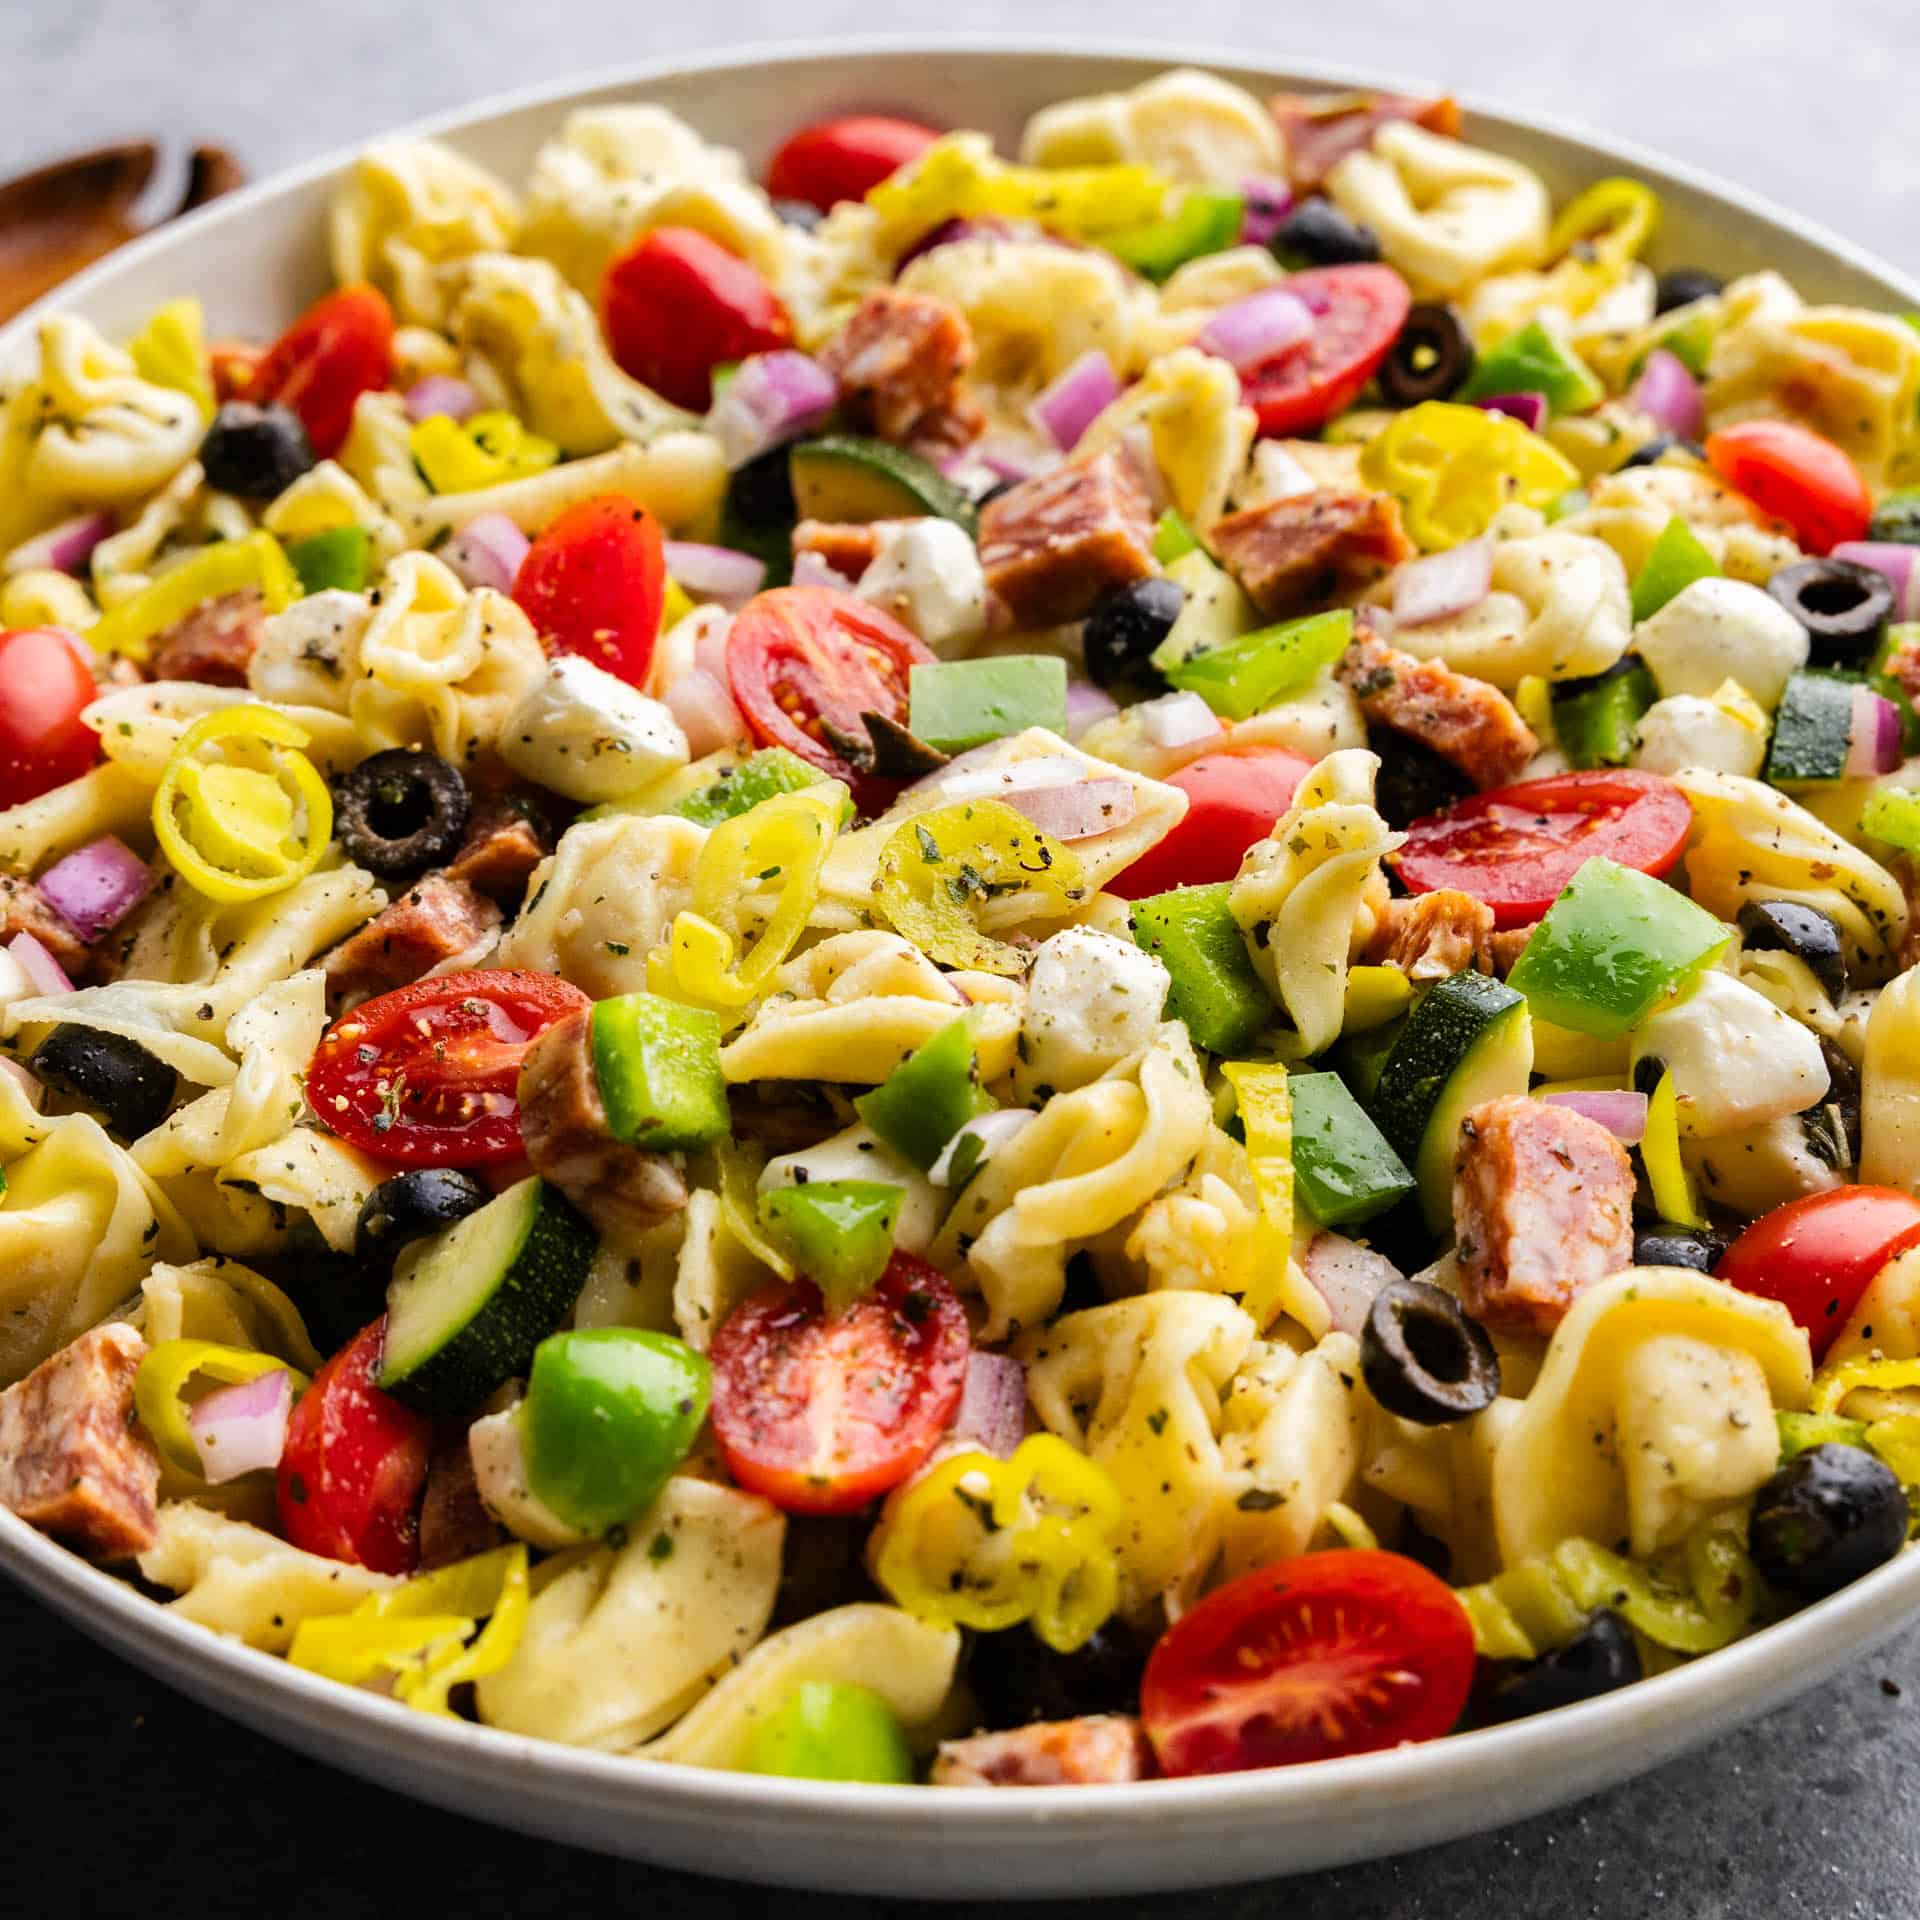 A large serving bowl of tortellini pasta salad.